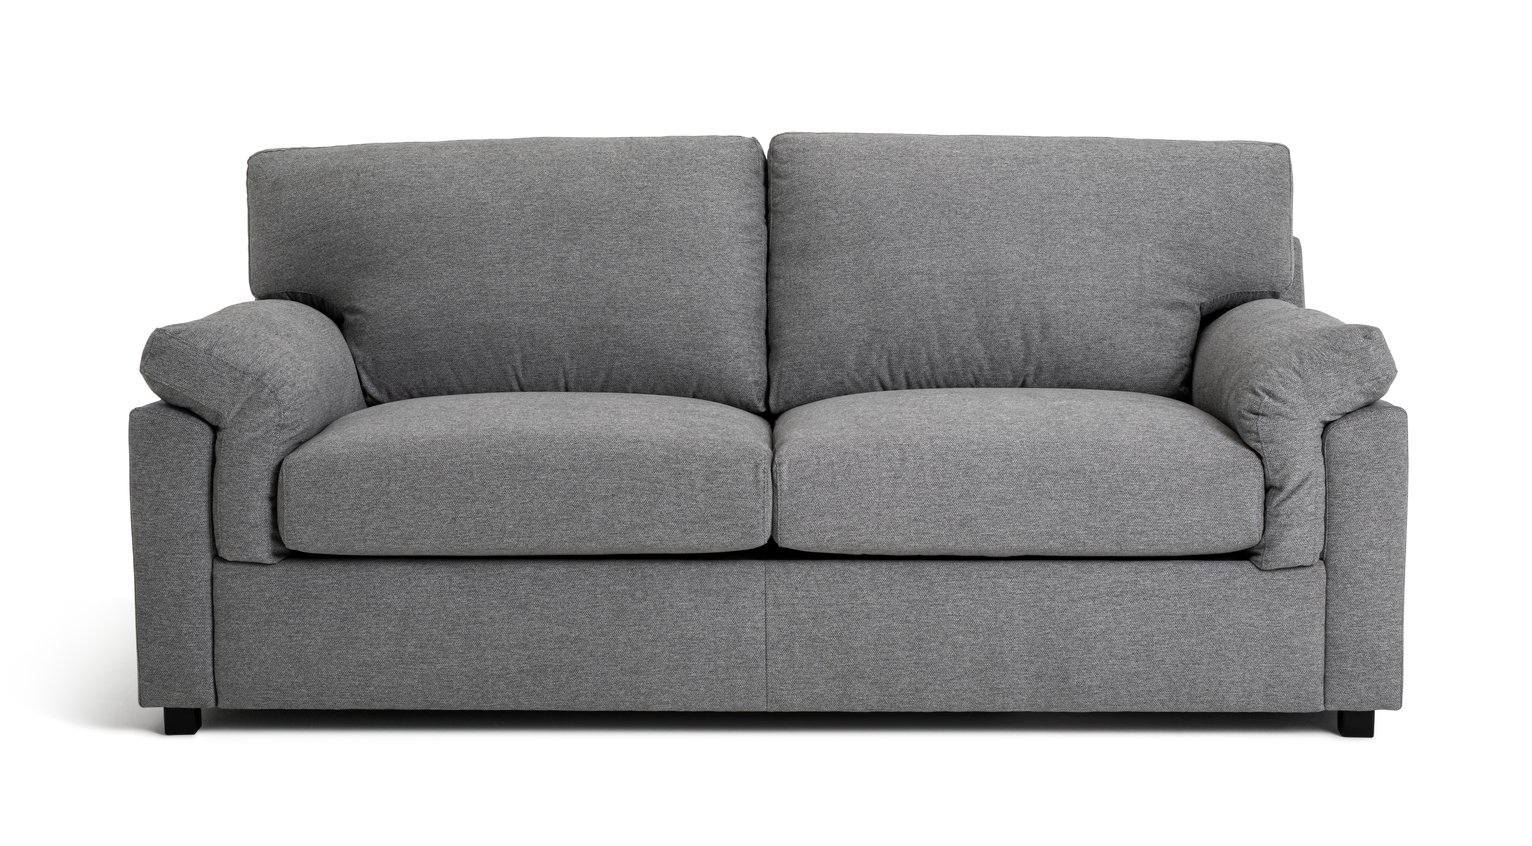 Habitat Florence Fabric 3 Seater Sofa - Grey